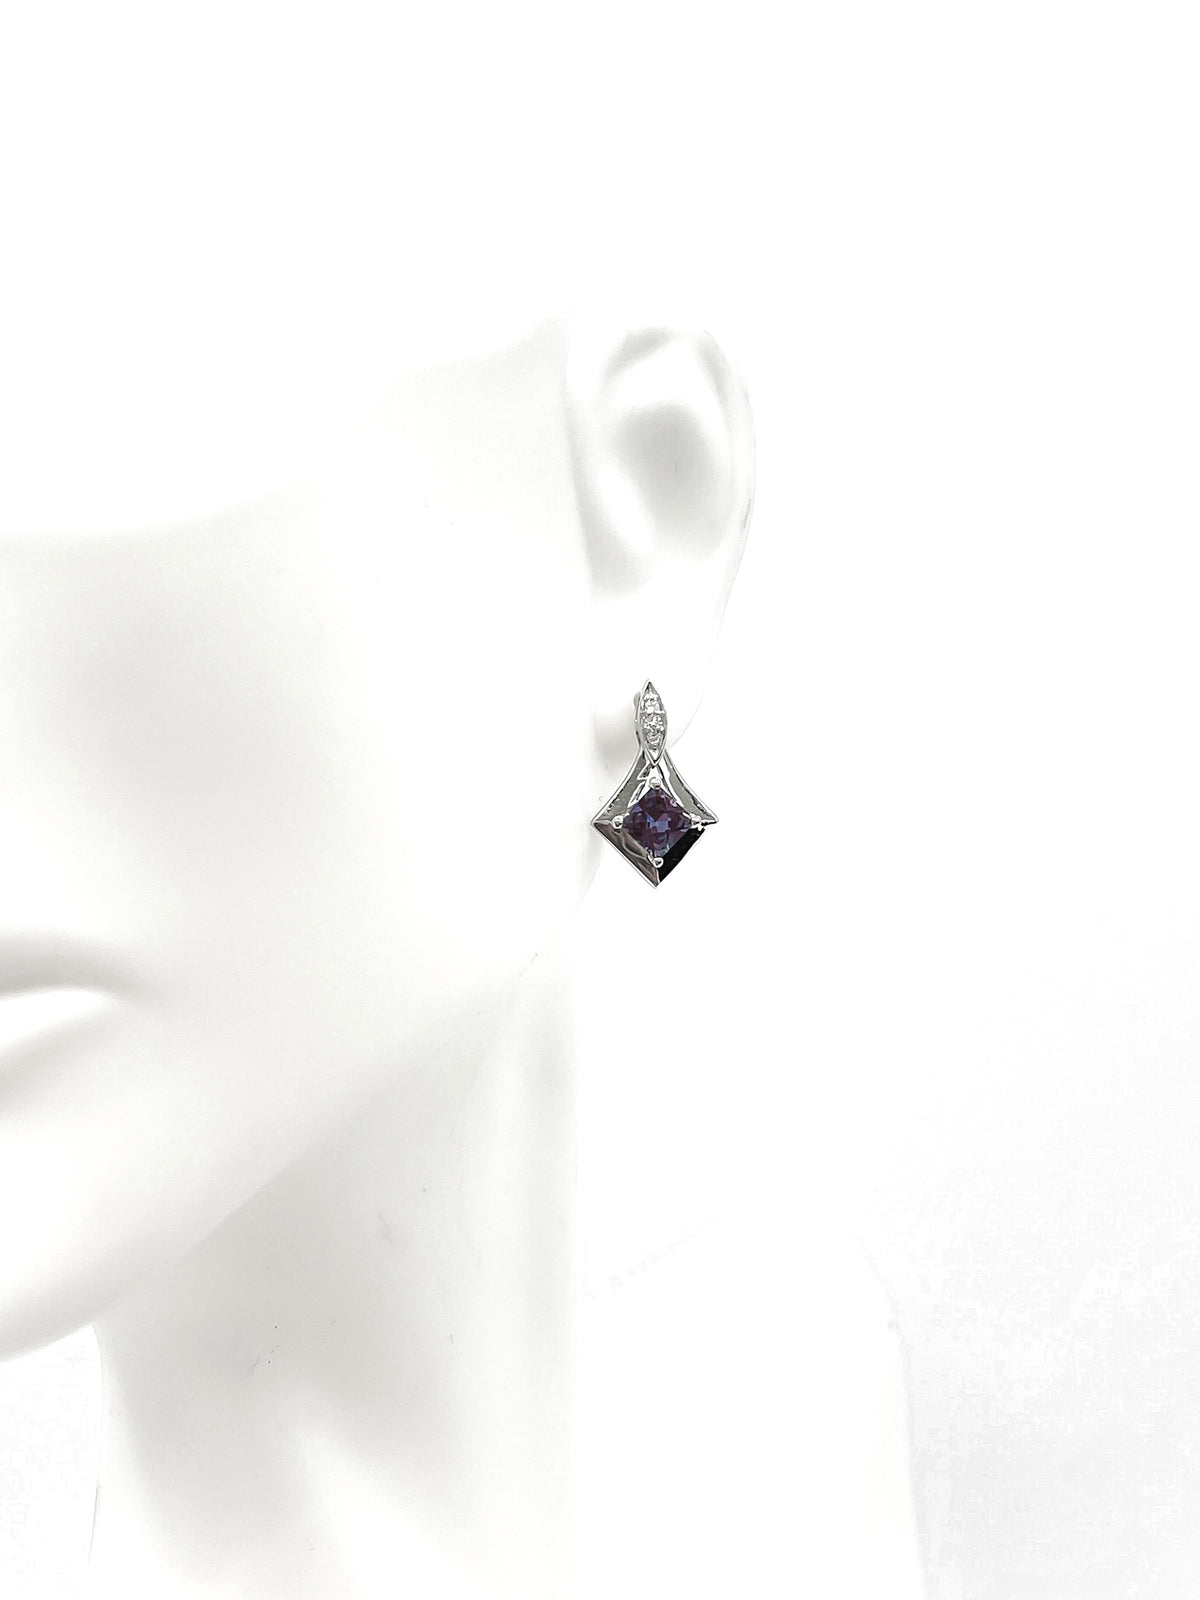 10K White Gold Created Alexandrite and 0.026cttw Diamond Earrings